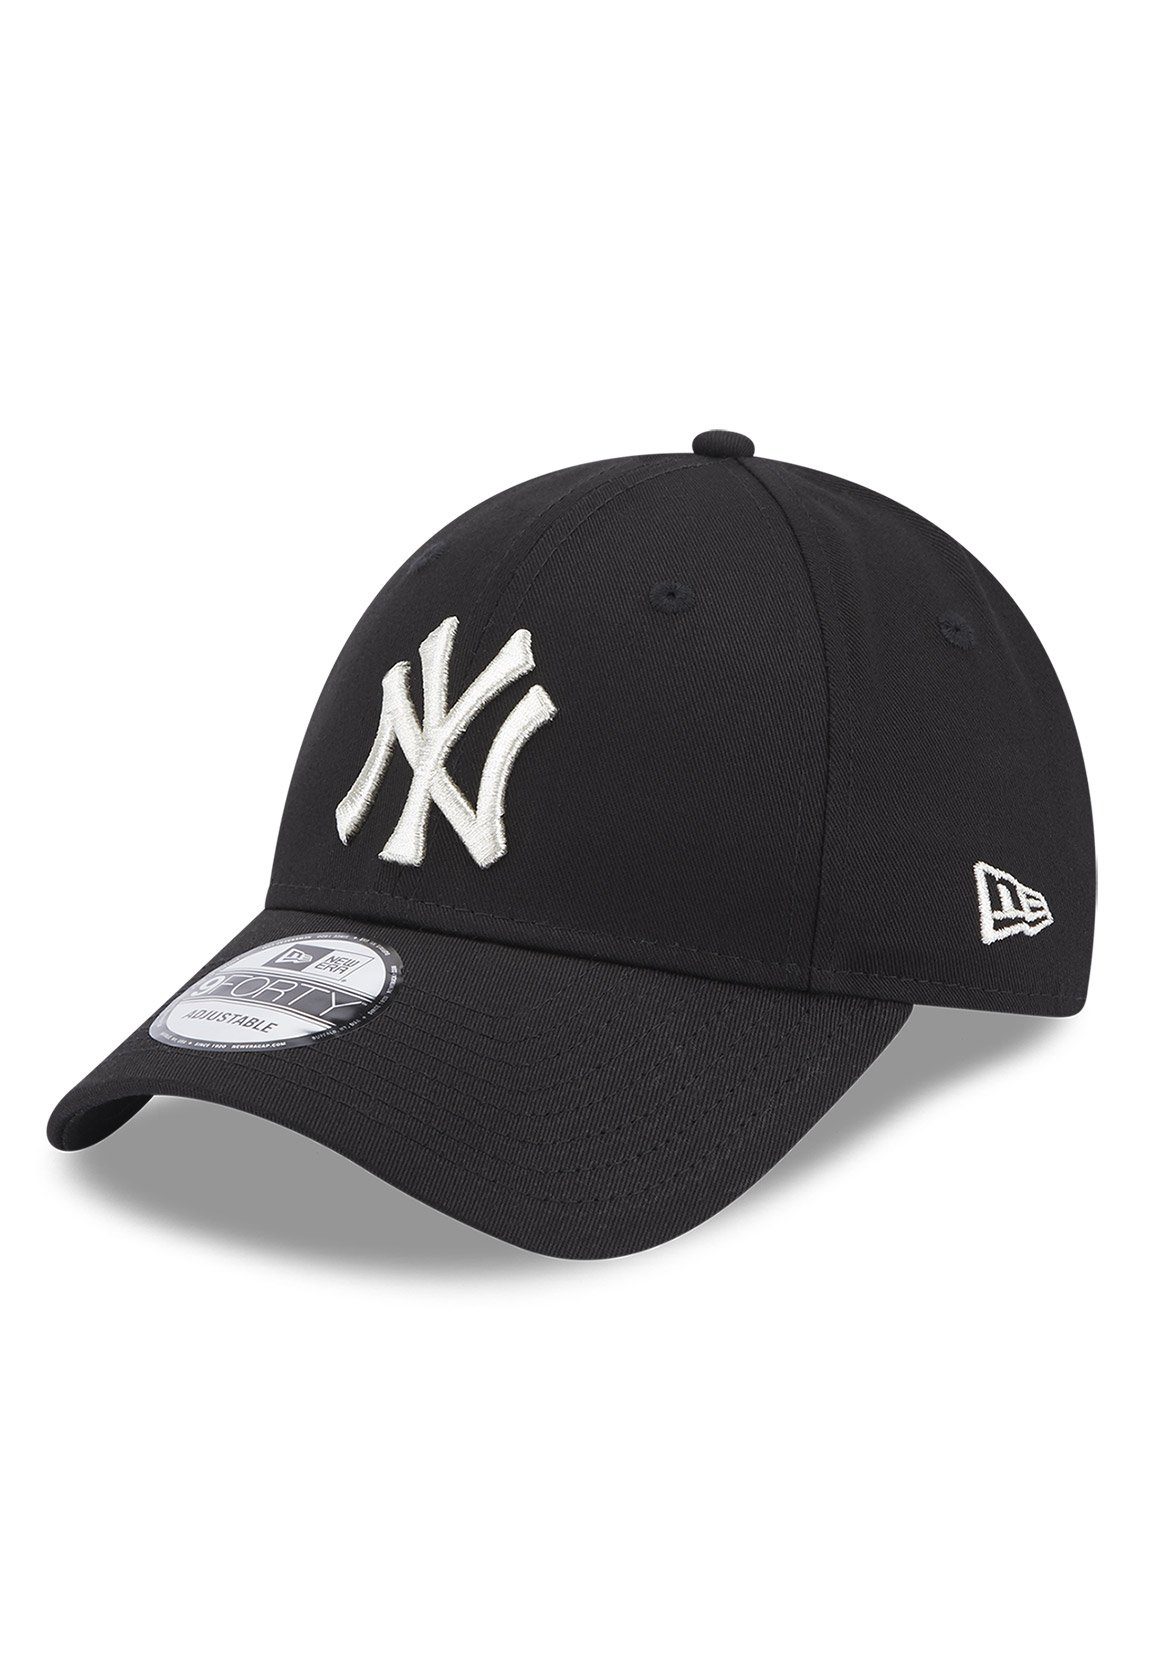 New Era Baseball Cap 9Forty METALLIC New York Yankees